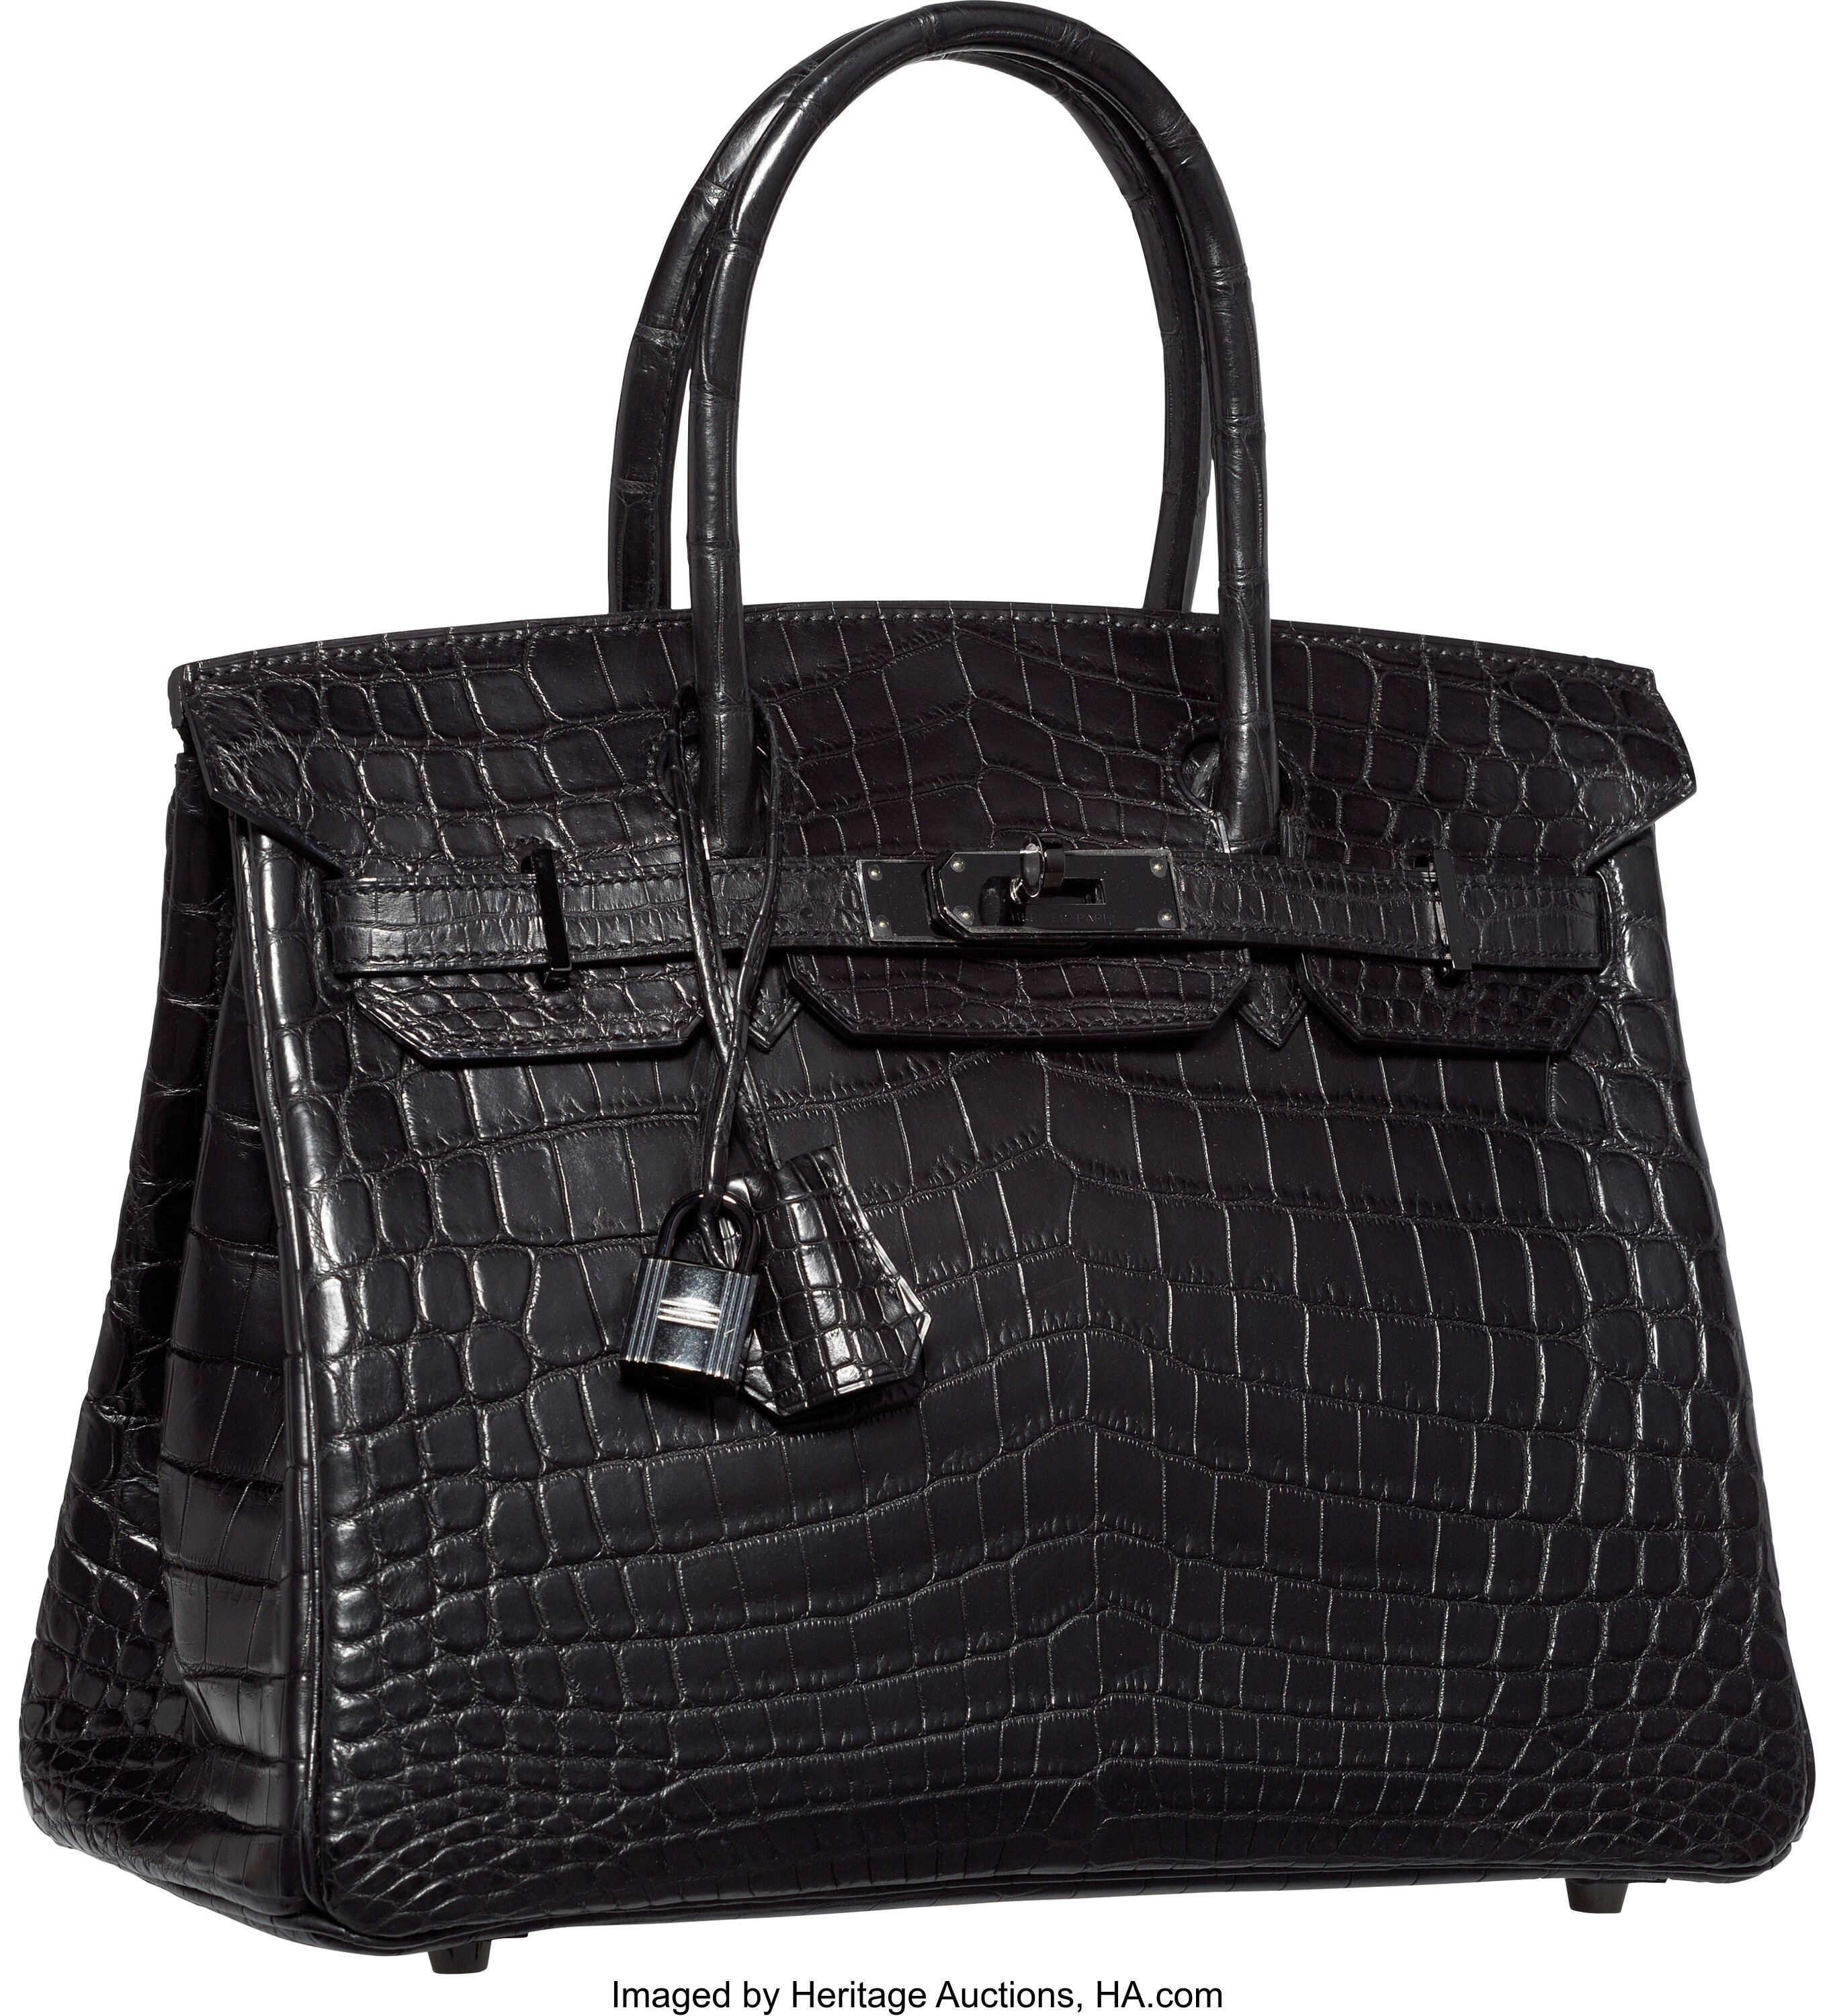 Hermès Birkin 30 cm Handbag in Black Niloticus Crocodile